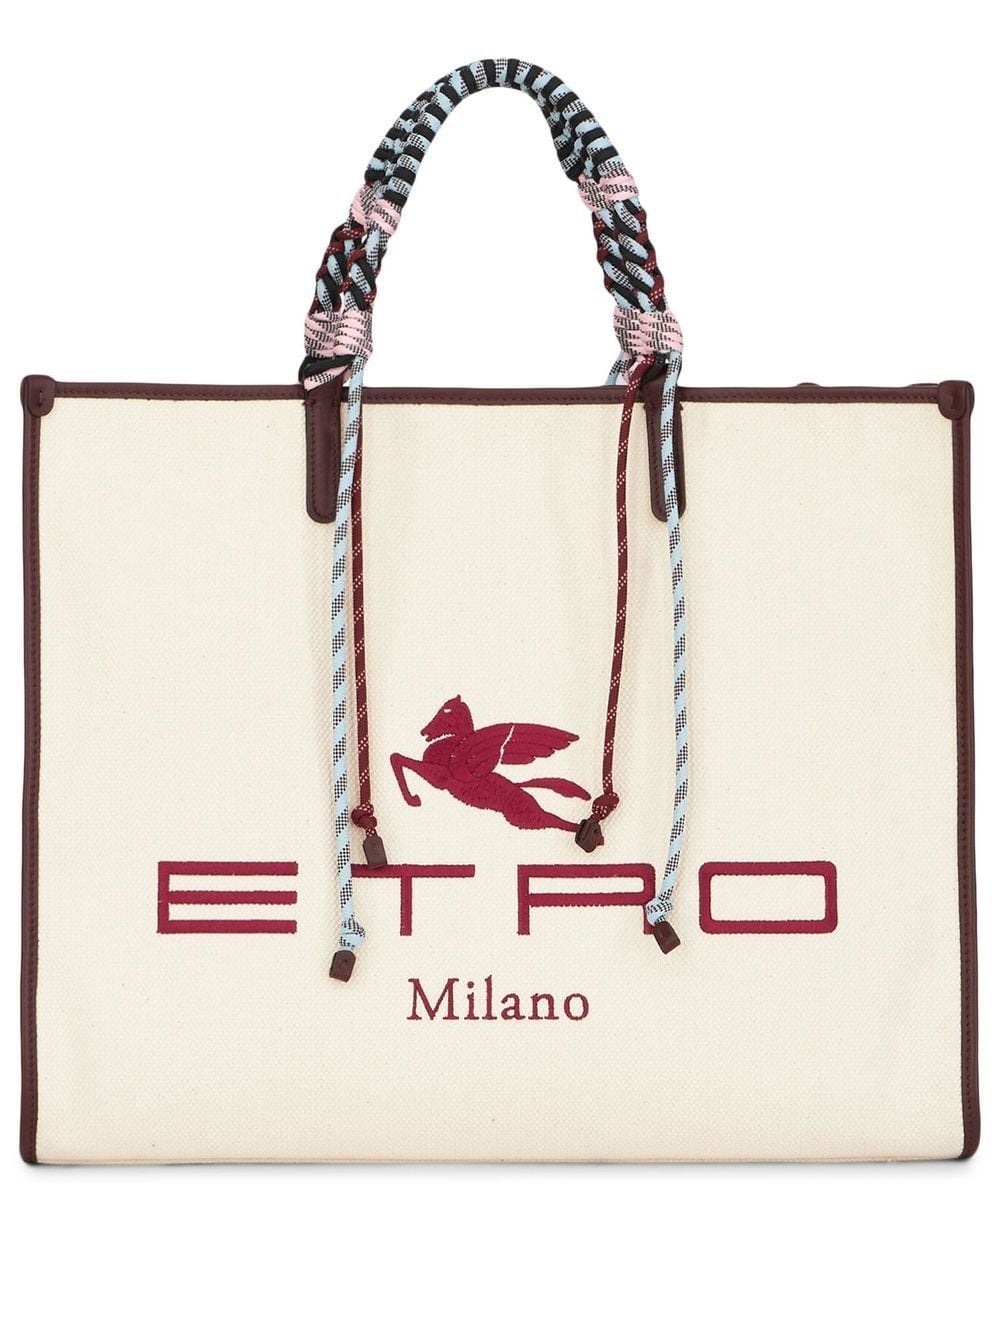 Etro, Bags, Etro Milano Velvet Tote Bag